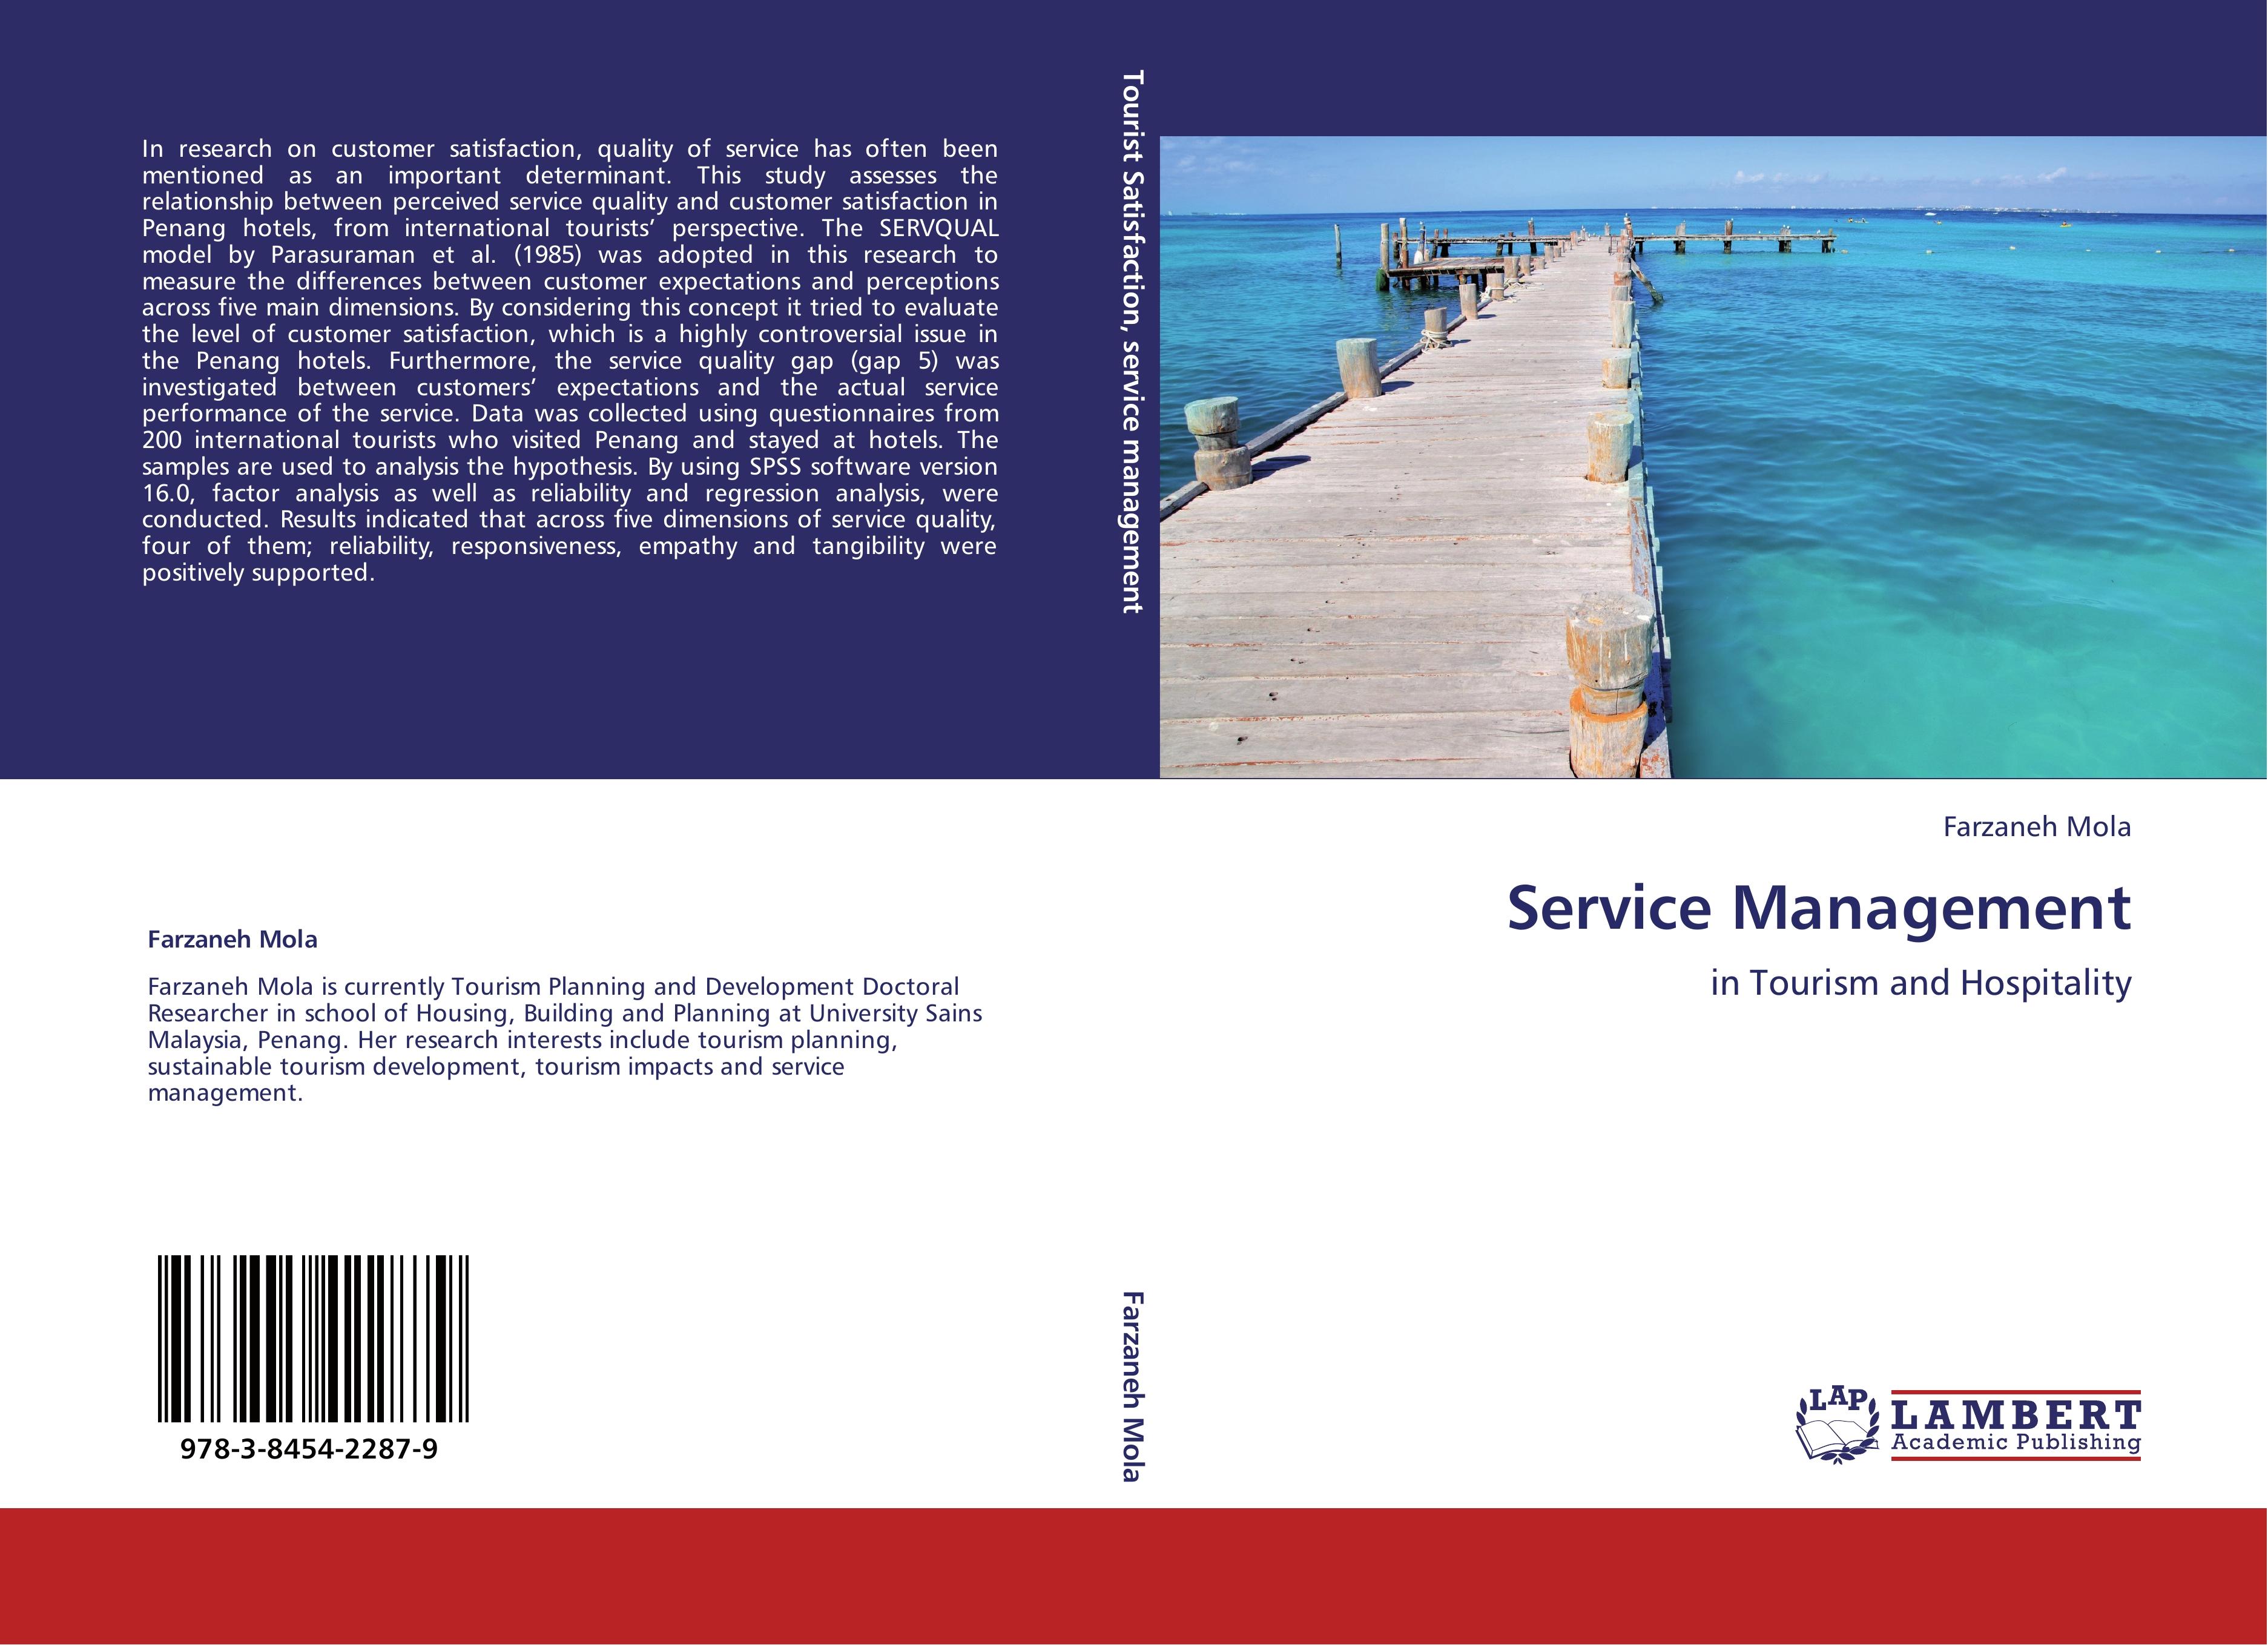 Service Management - Farzaneh Mola